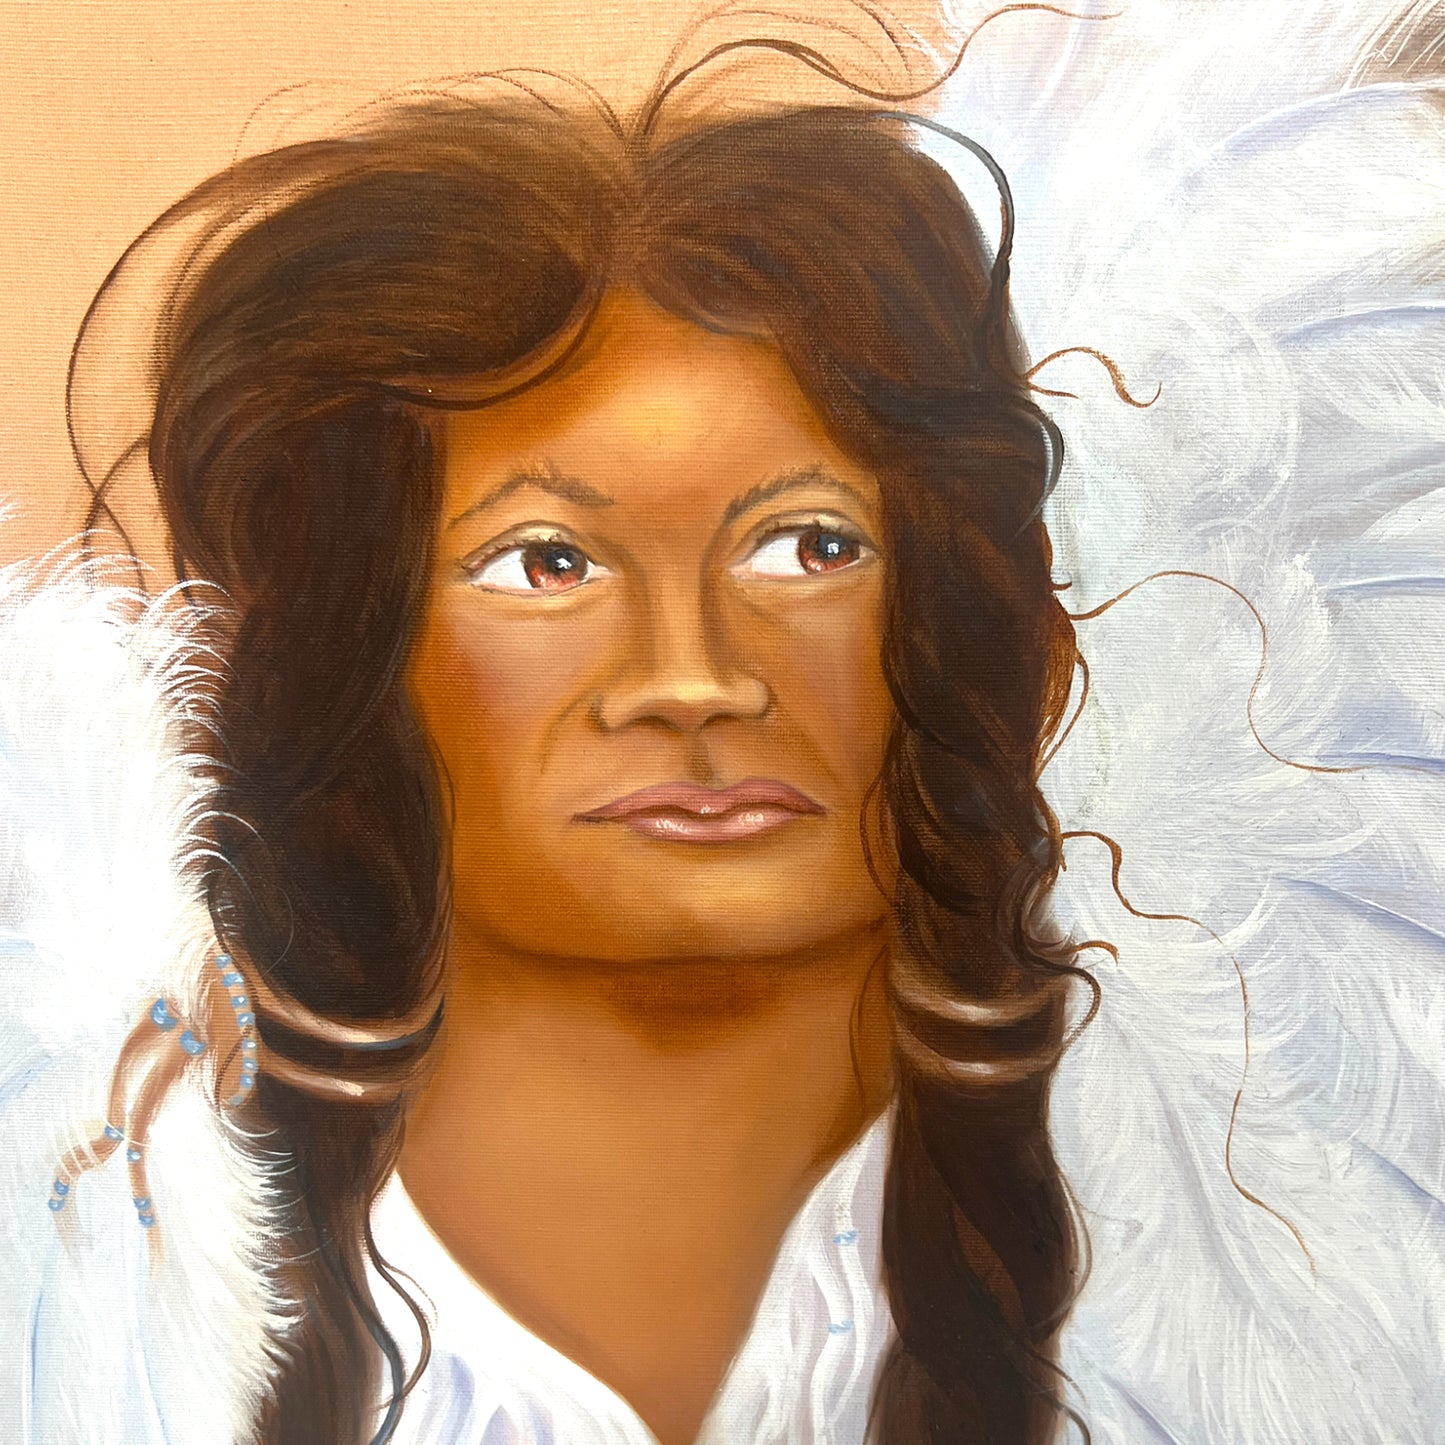 Native American Man Portrait Oil on Canvas Signed "Teata 1997"